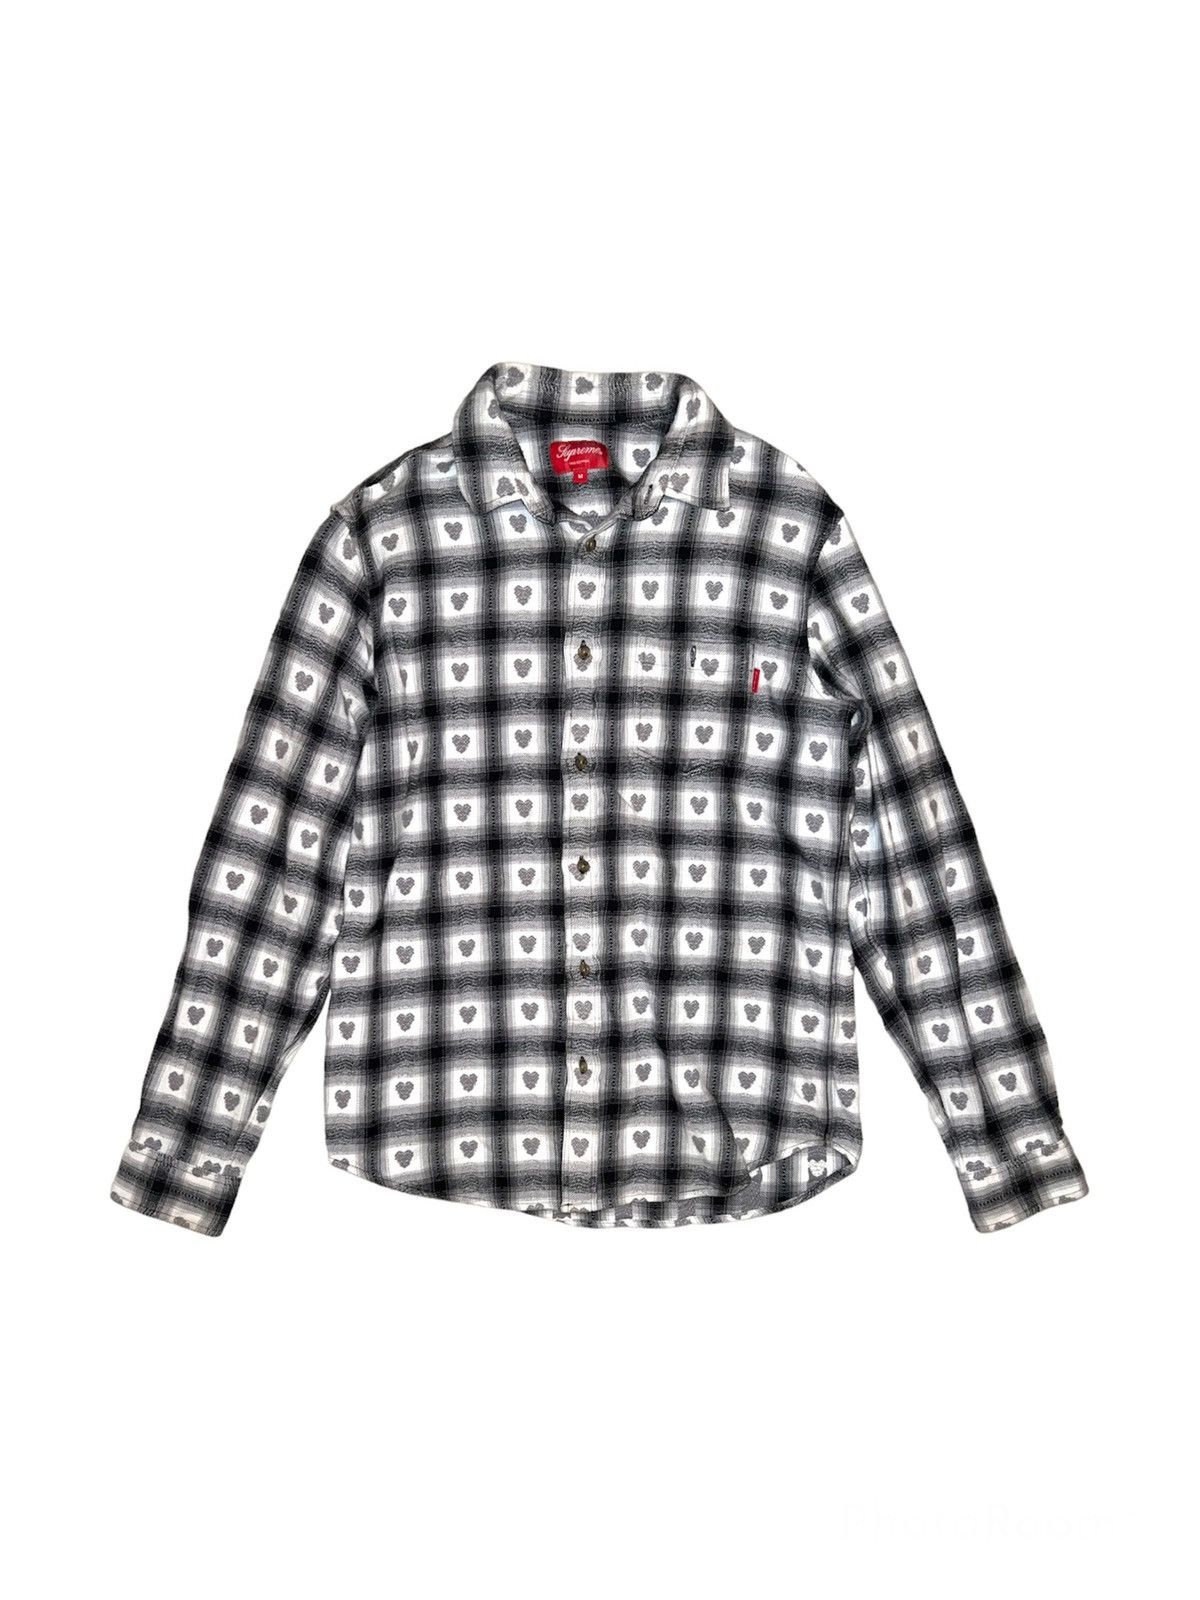 Supreme Supreme Hearts Plaid Flannel Button Shirt SS16 | Grailed